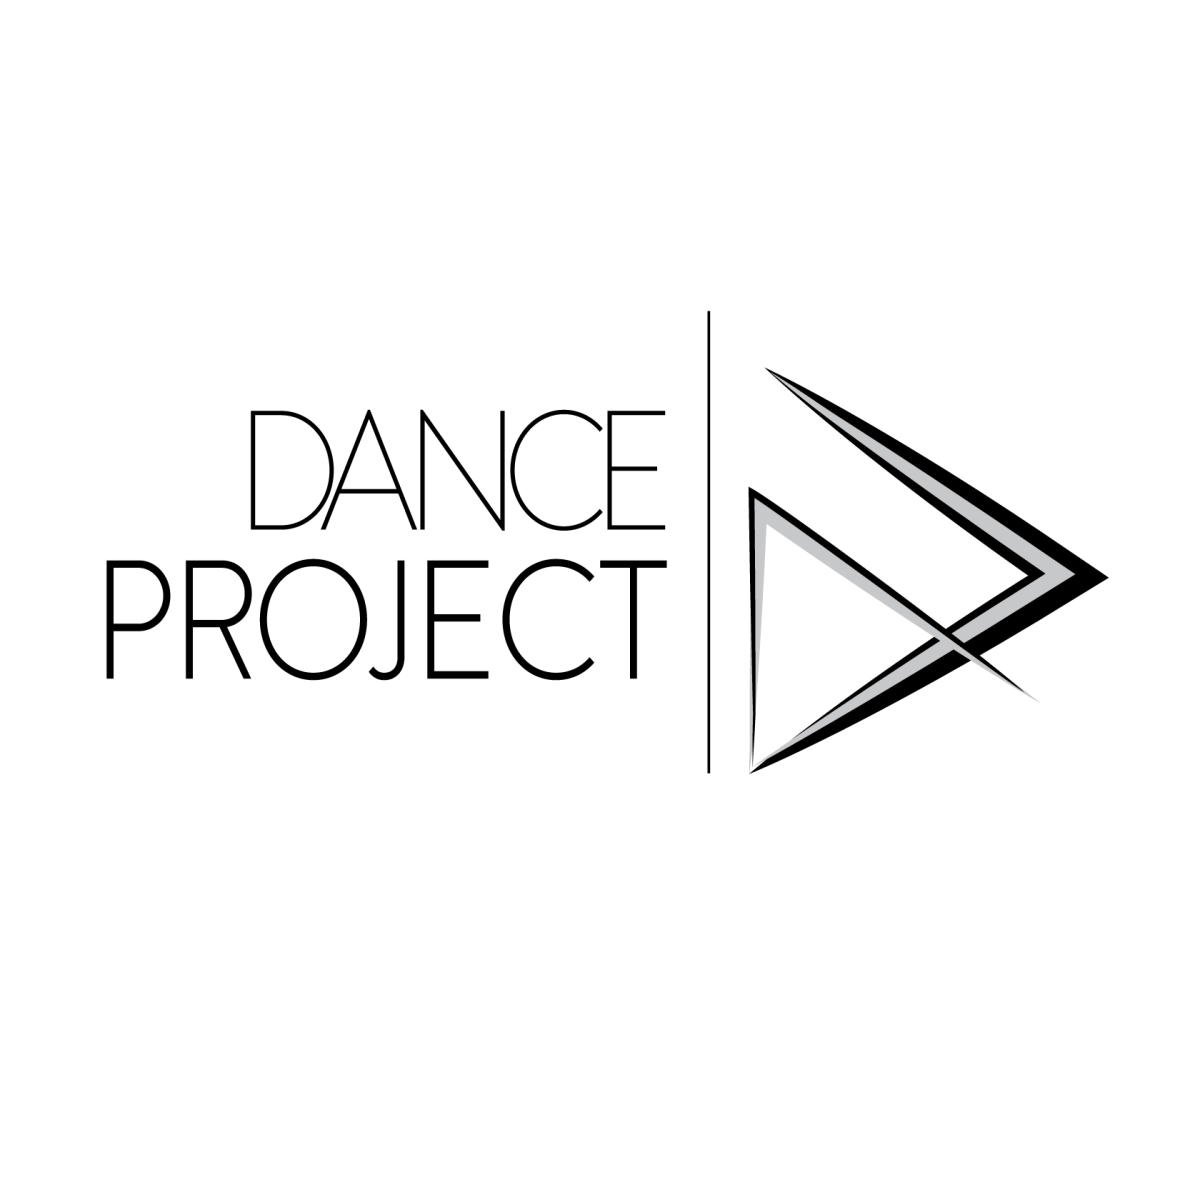 Dance Project logo.jpg